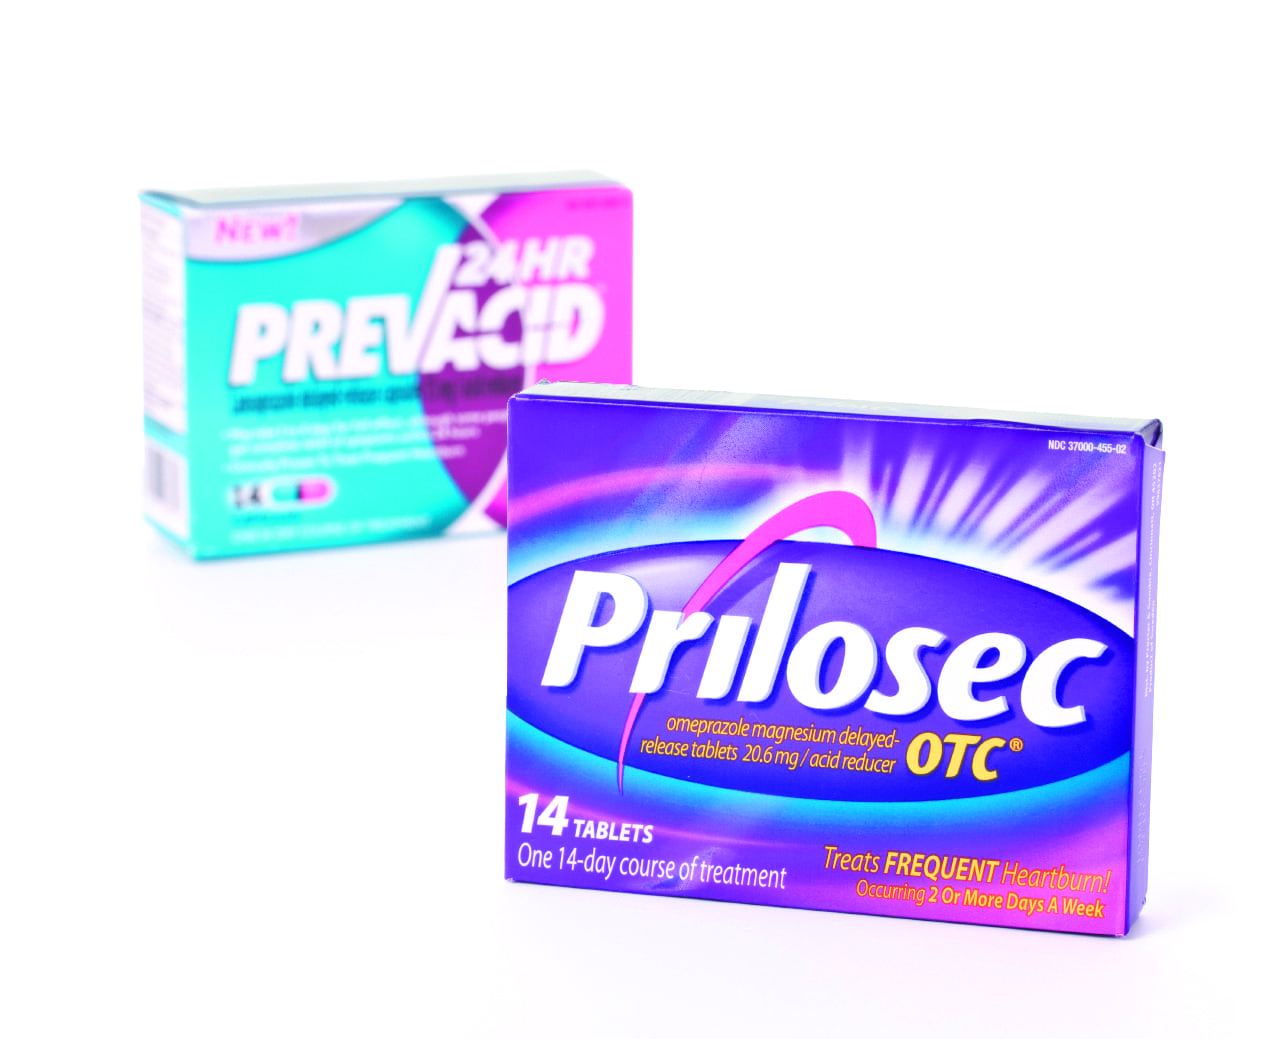 Box of Prilosec